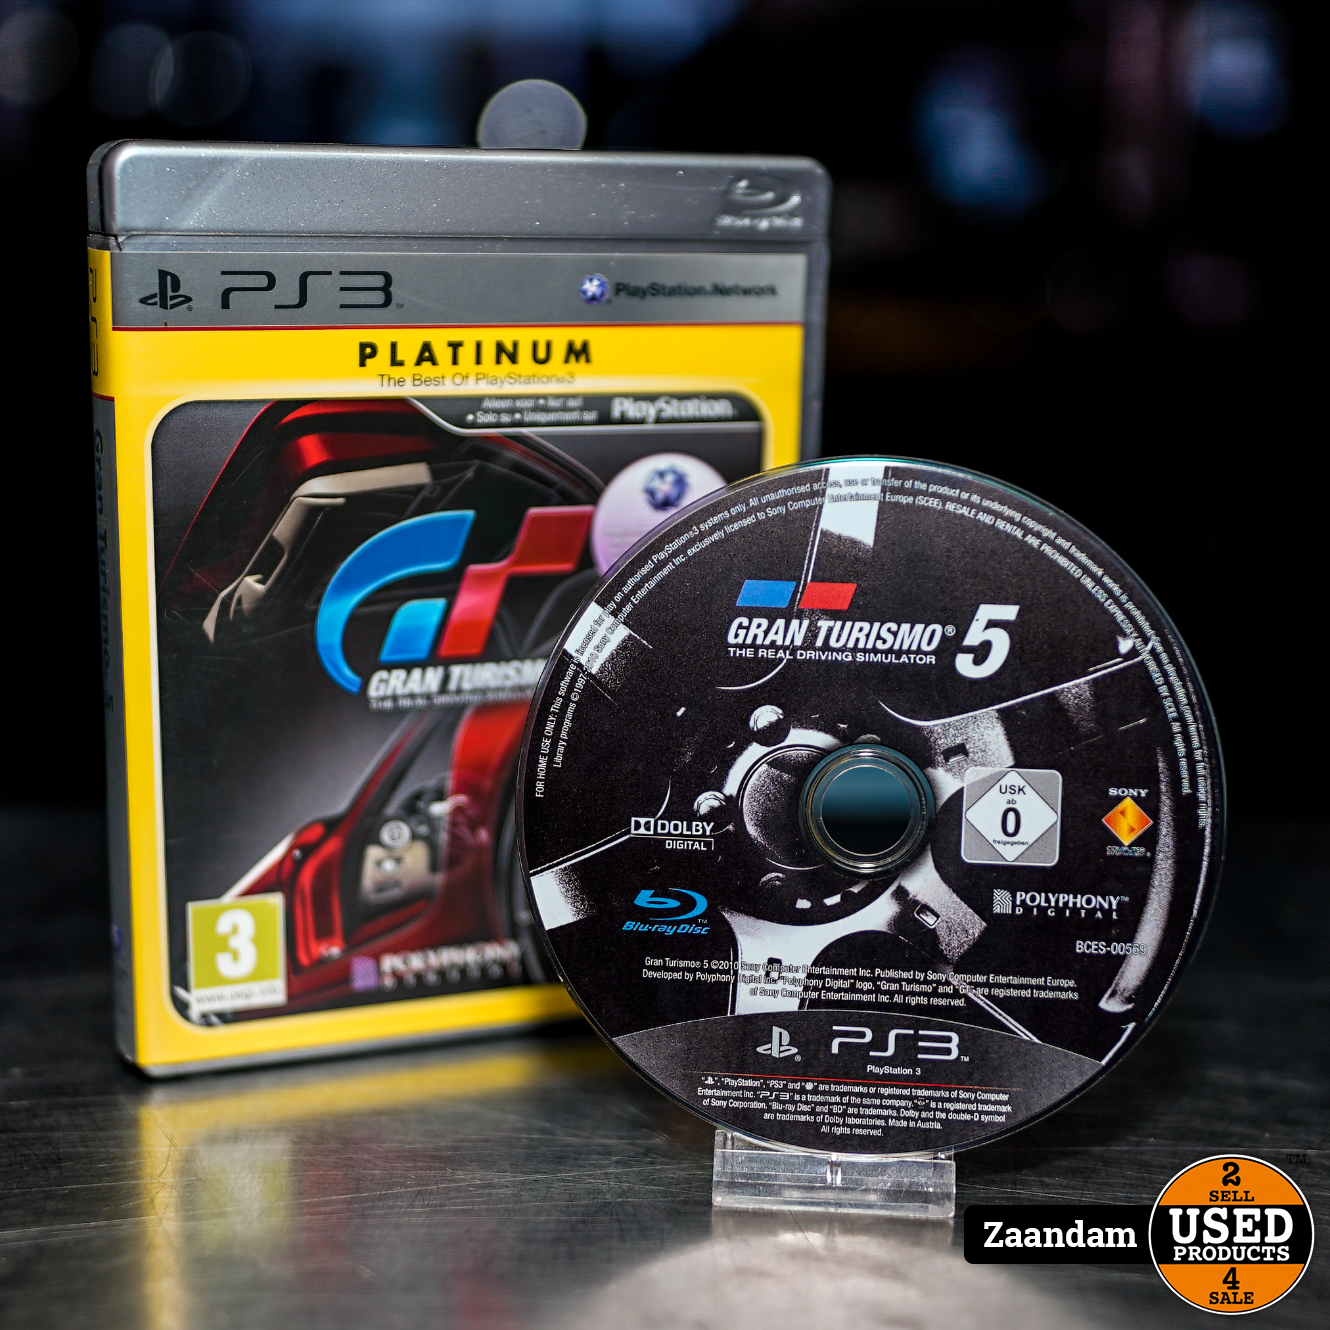 Reactor kom tot rust Naar Playstation 3 Game: Gran Turismo 5 Platinum (PS3) - Used Products Zaandam